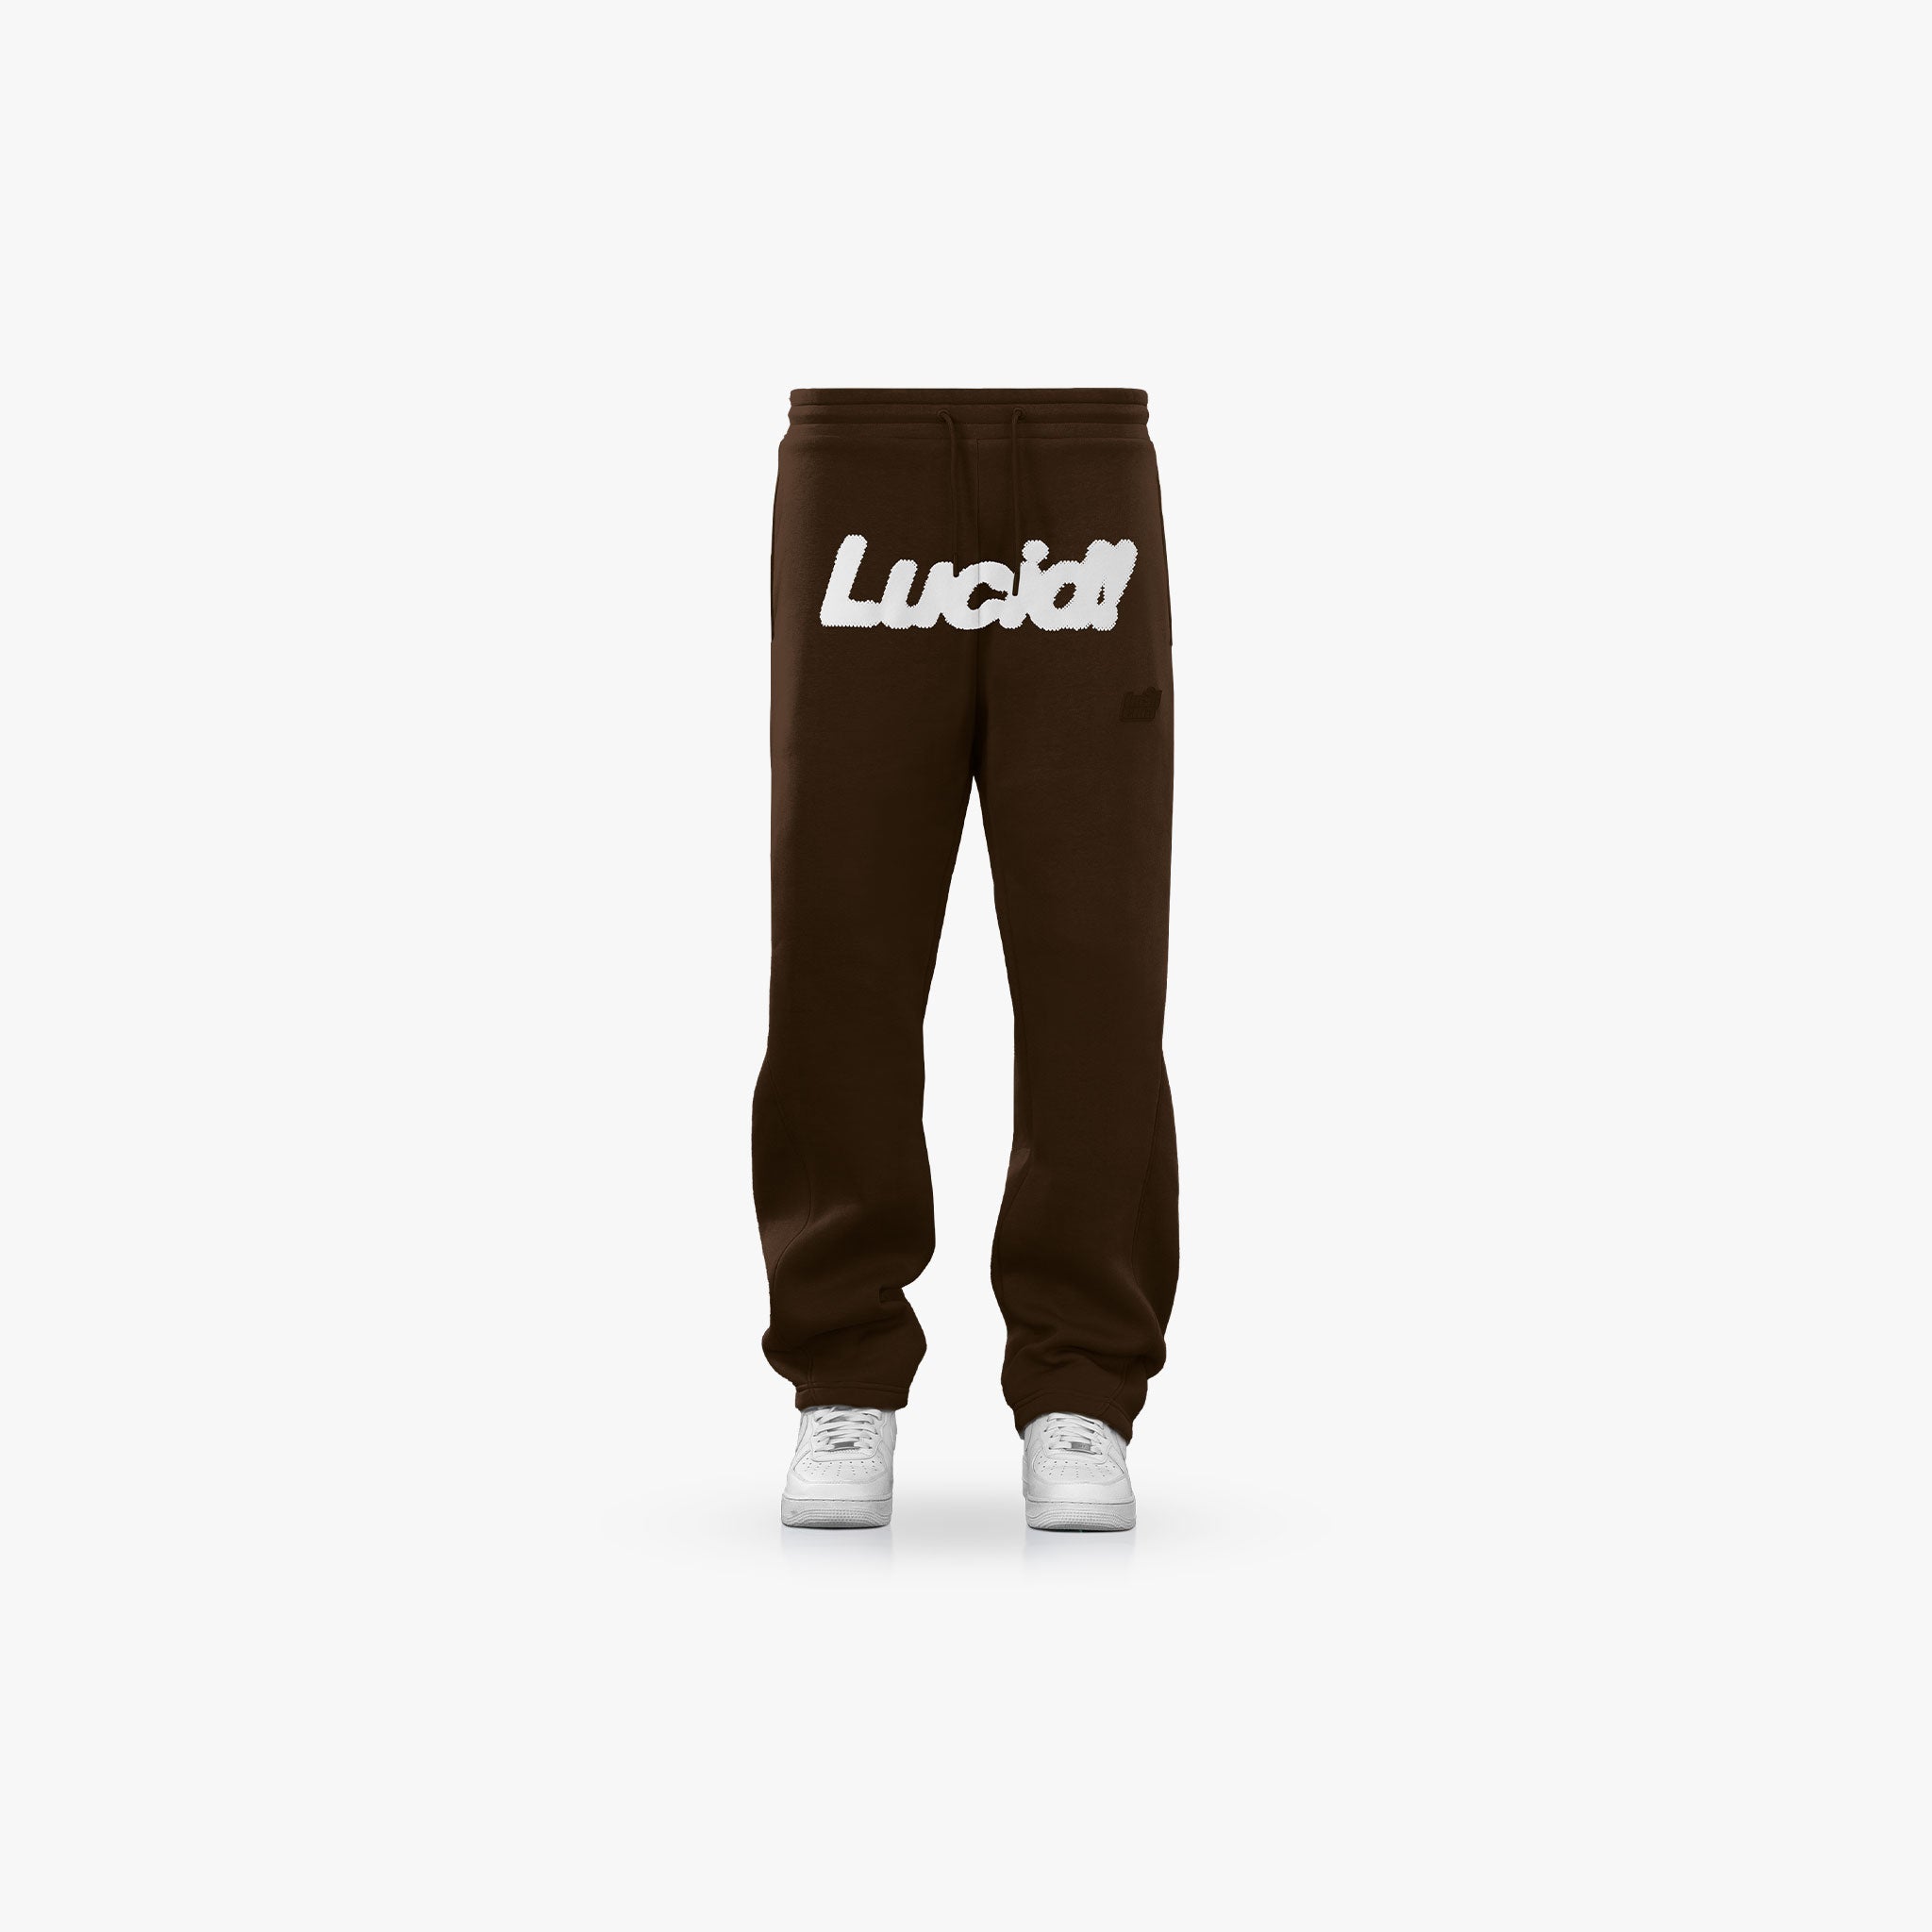 Lucid! Sweatpants Brown/White - Lucid Club